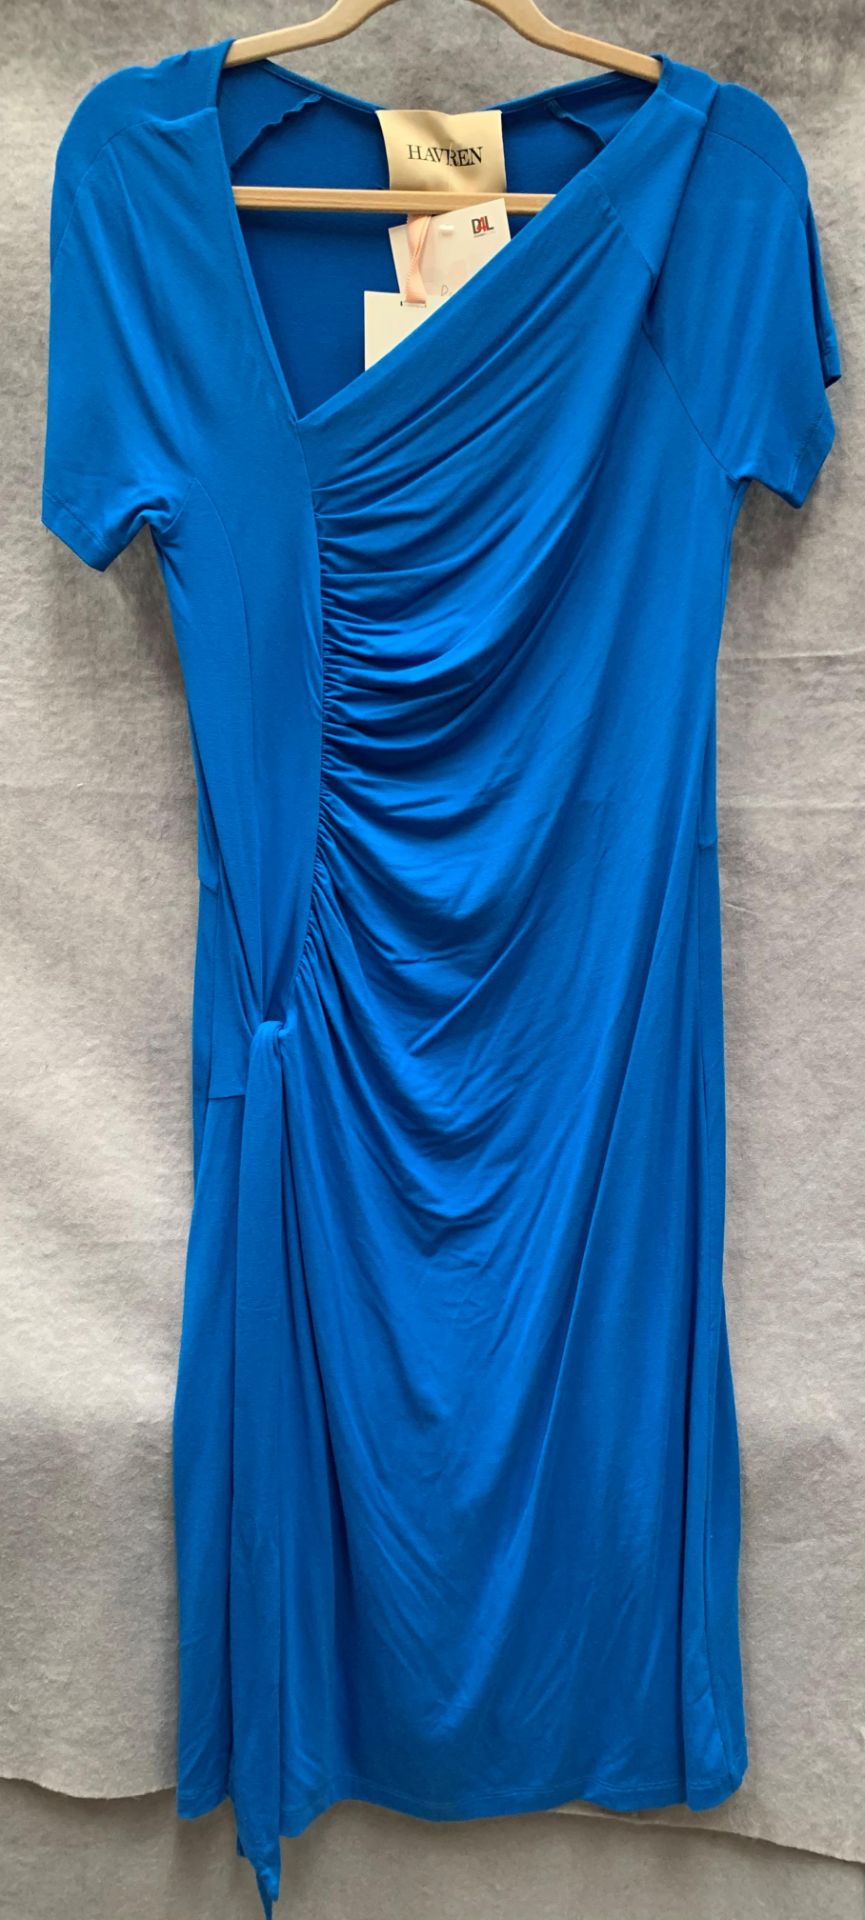 A Havren ladies dress, blue, size 10,